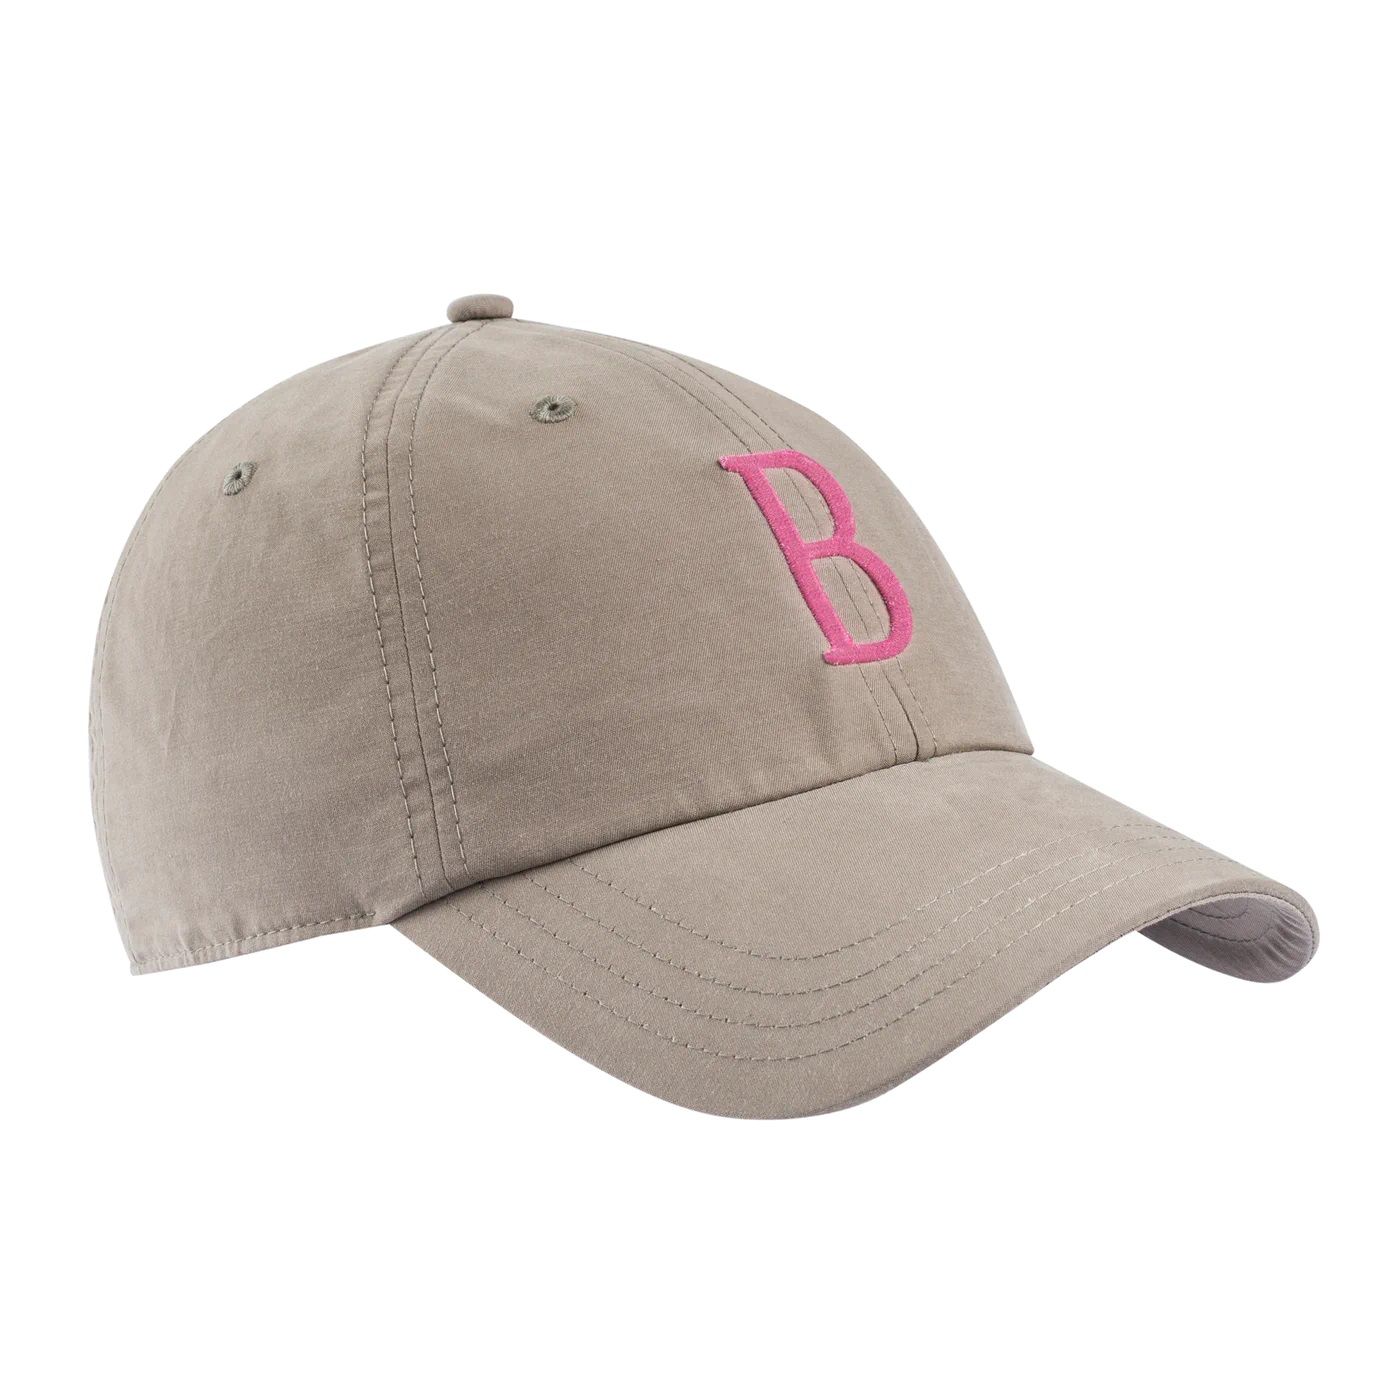 Beretta Big B Cap grau one Size pink Emblem